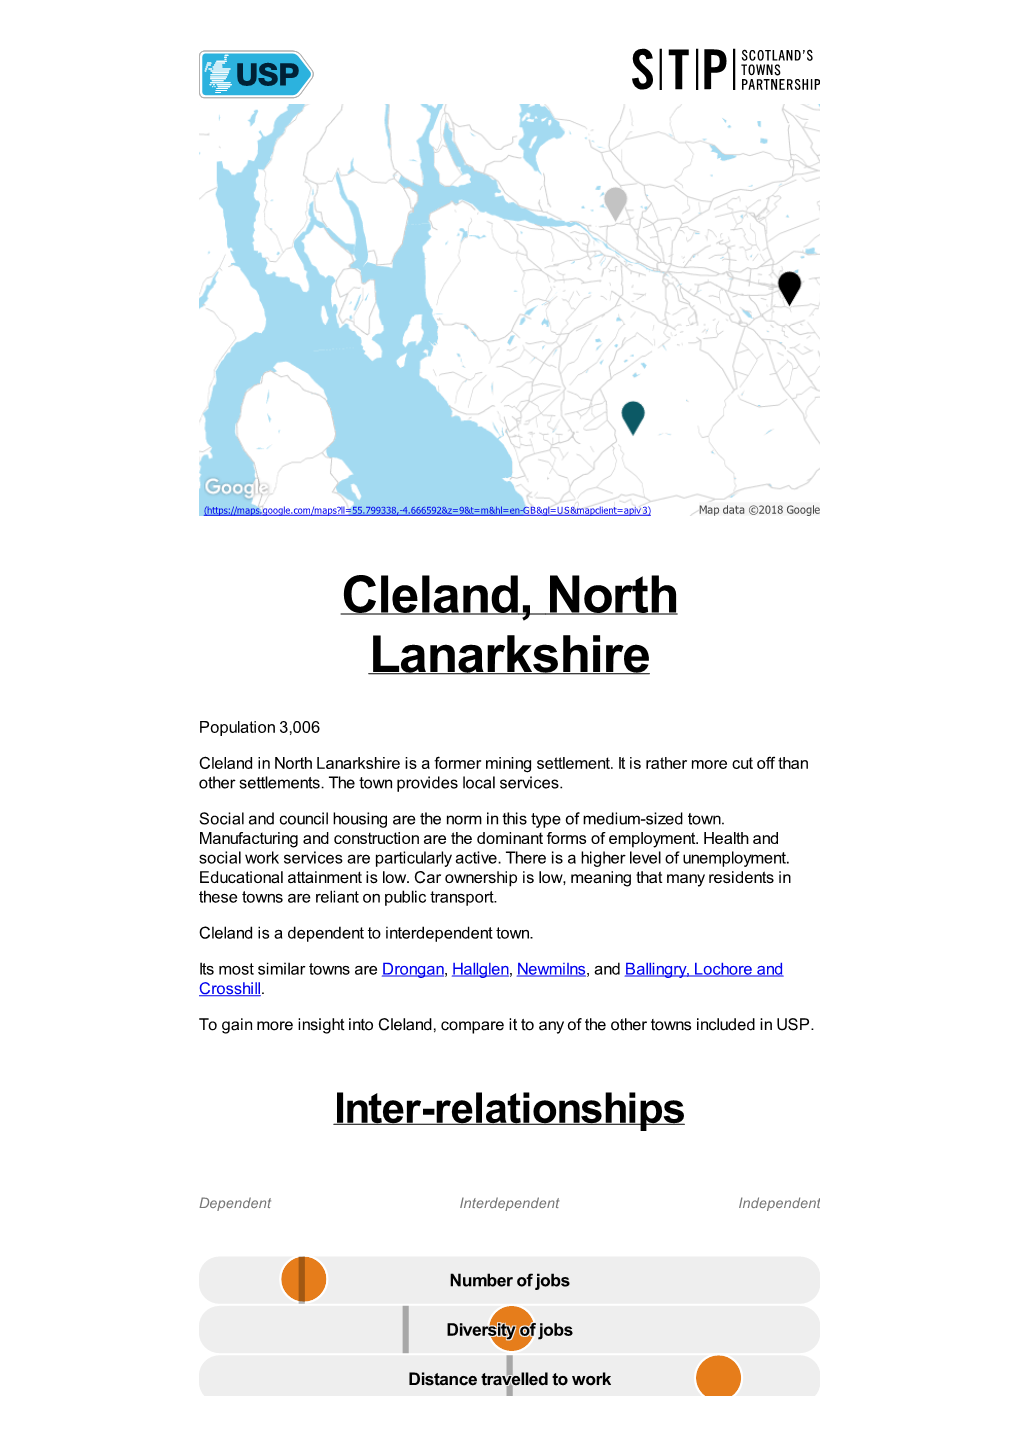 Cleland, North Lanarkshire